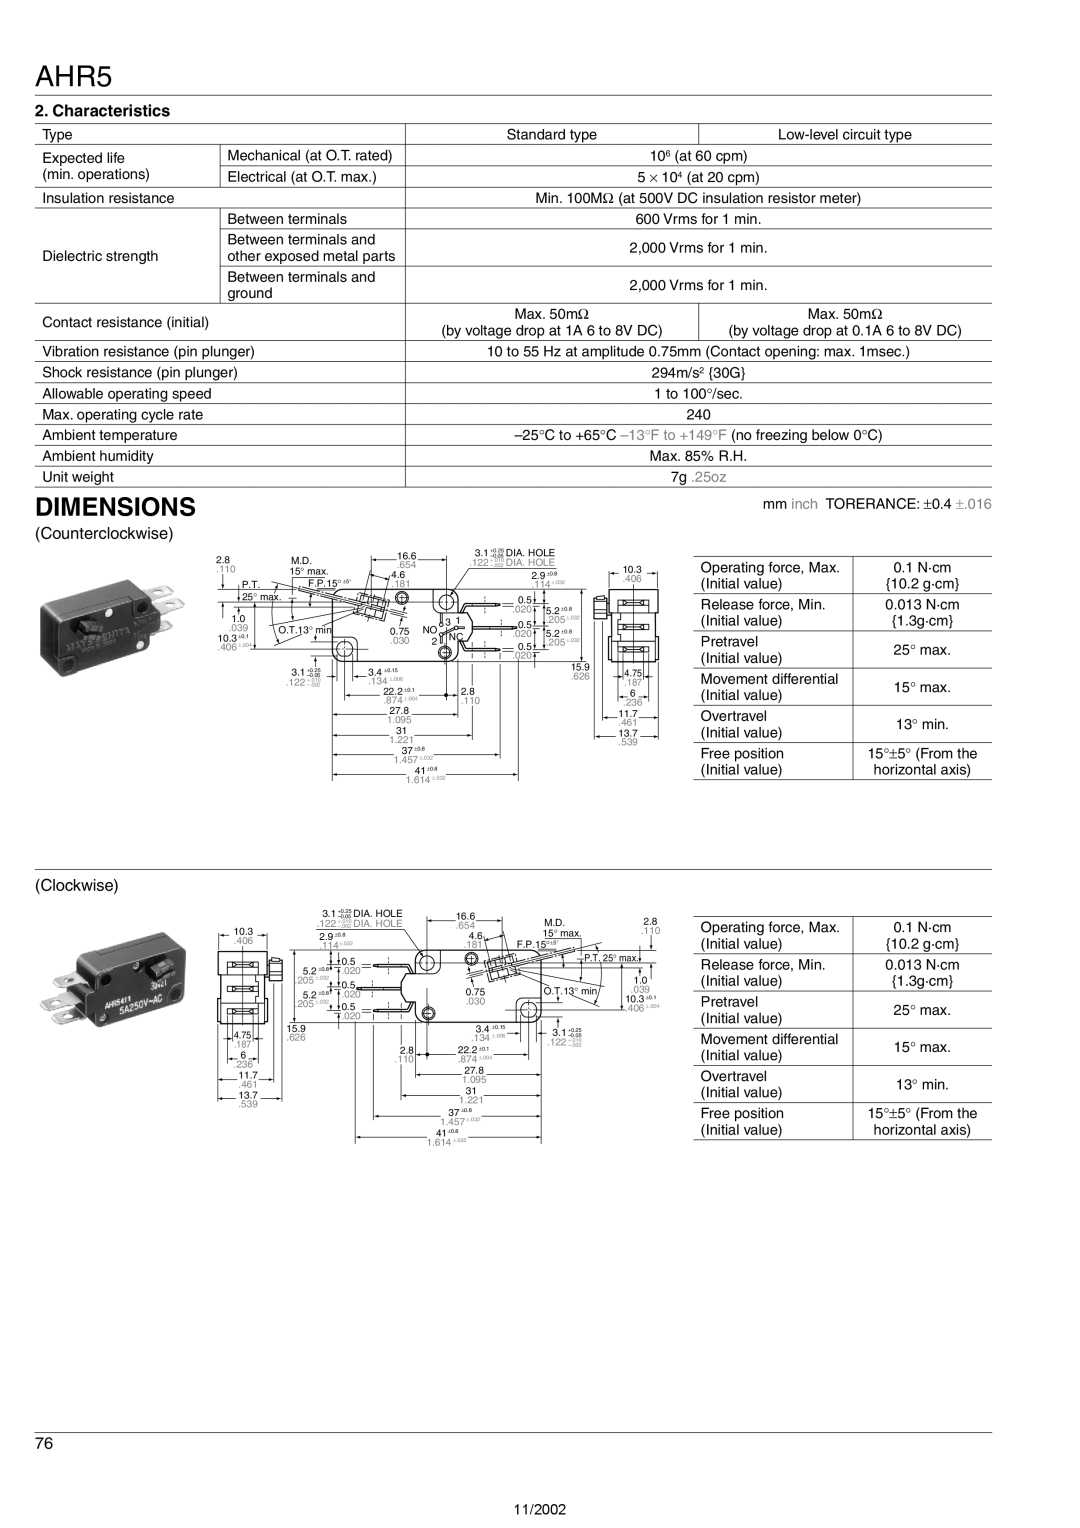 Panasonic AHR5 specifications Dimensions, Characteristics 